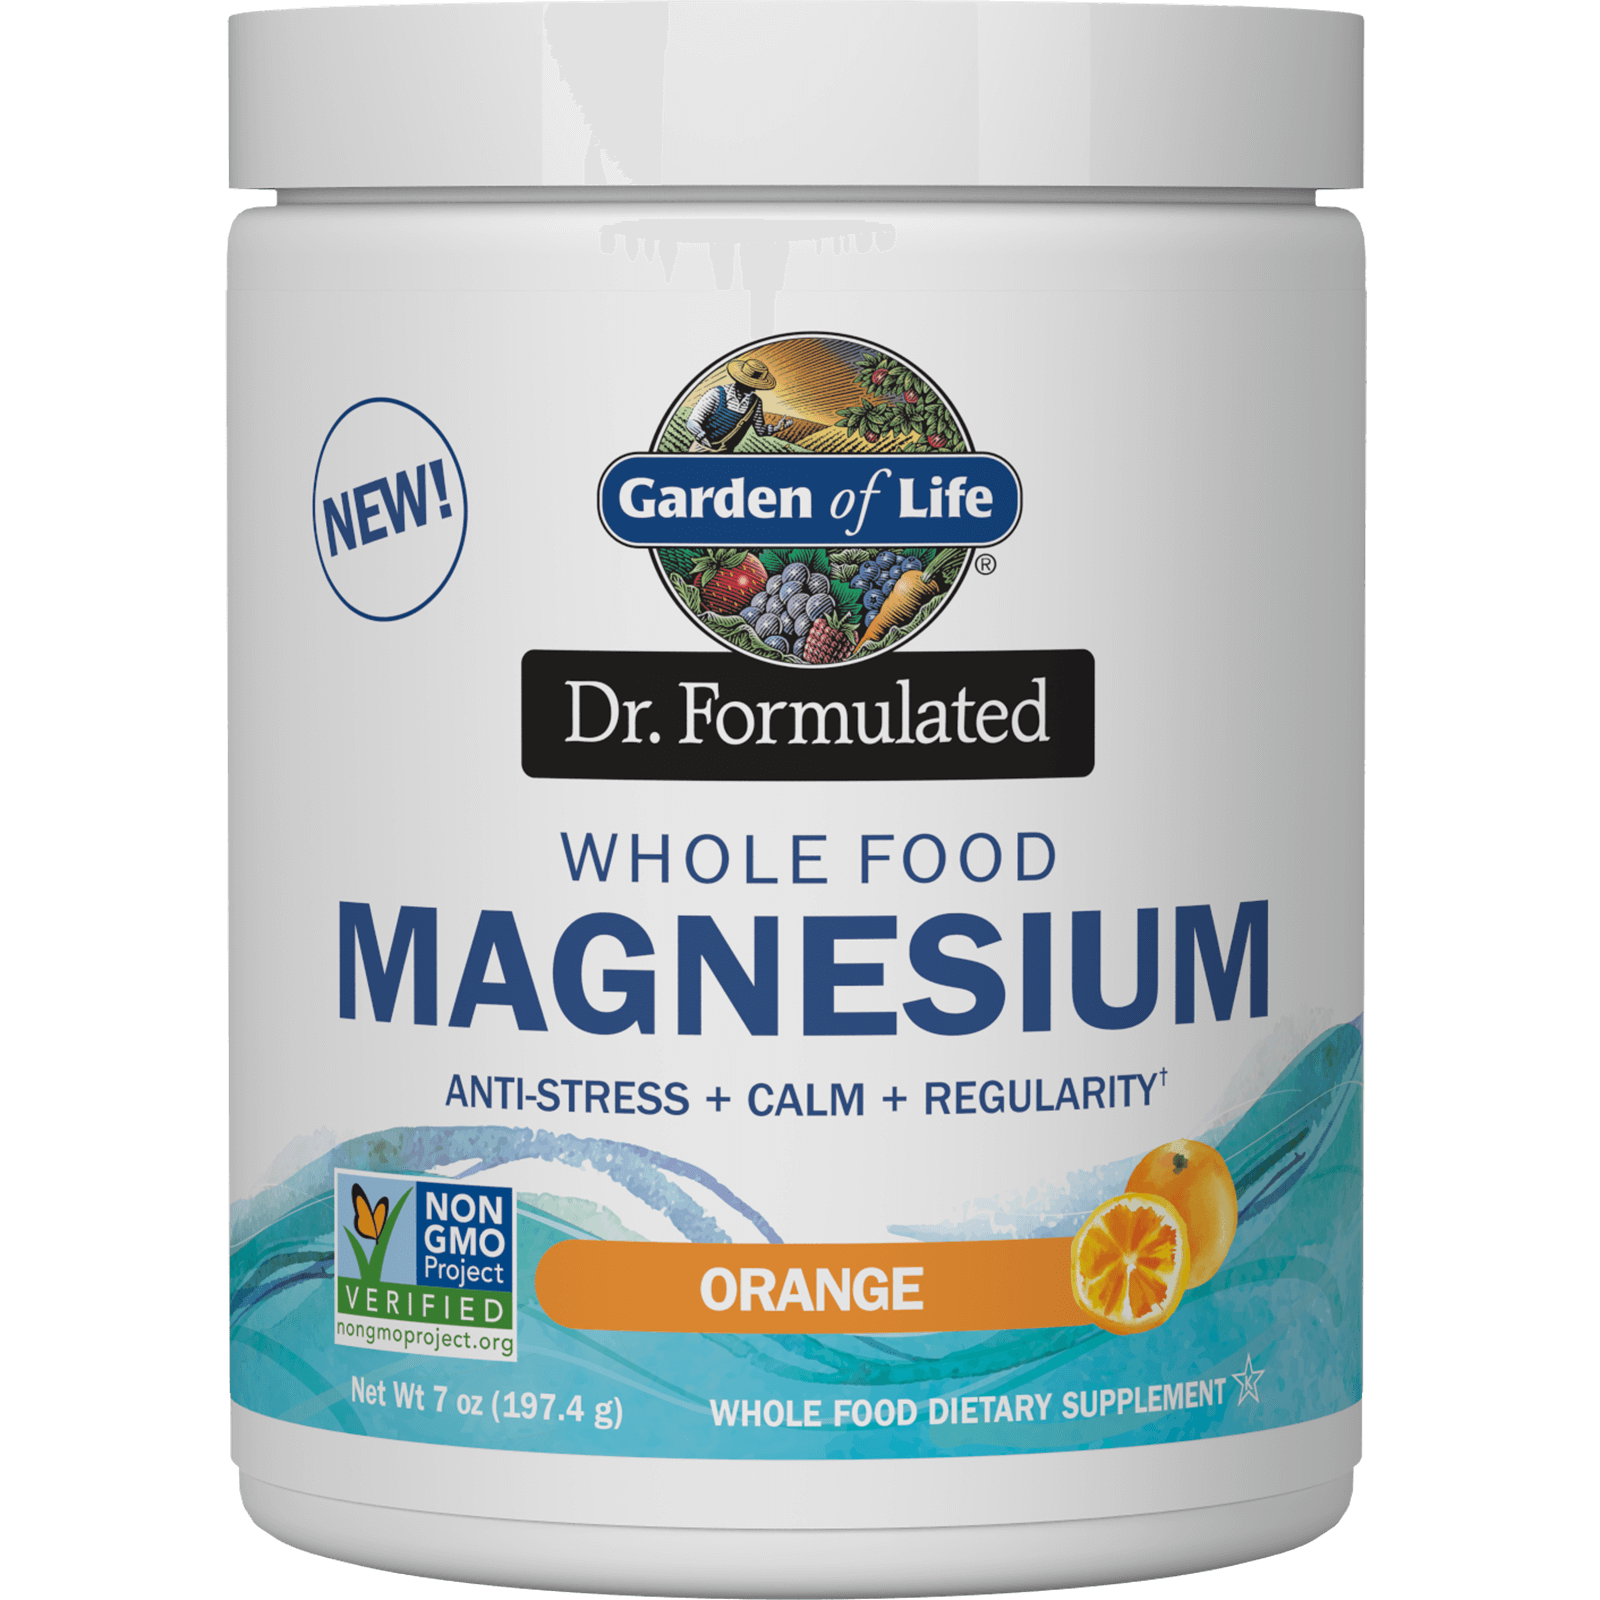 Garden of Life Dr. Formulated Whole Food Magnesium Tablets - Orange 197.4g